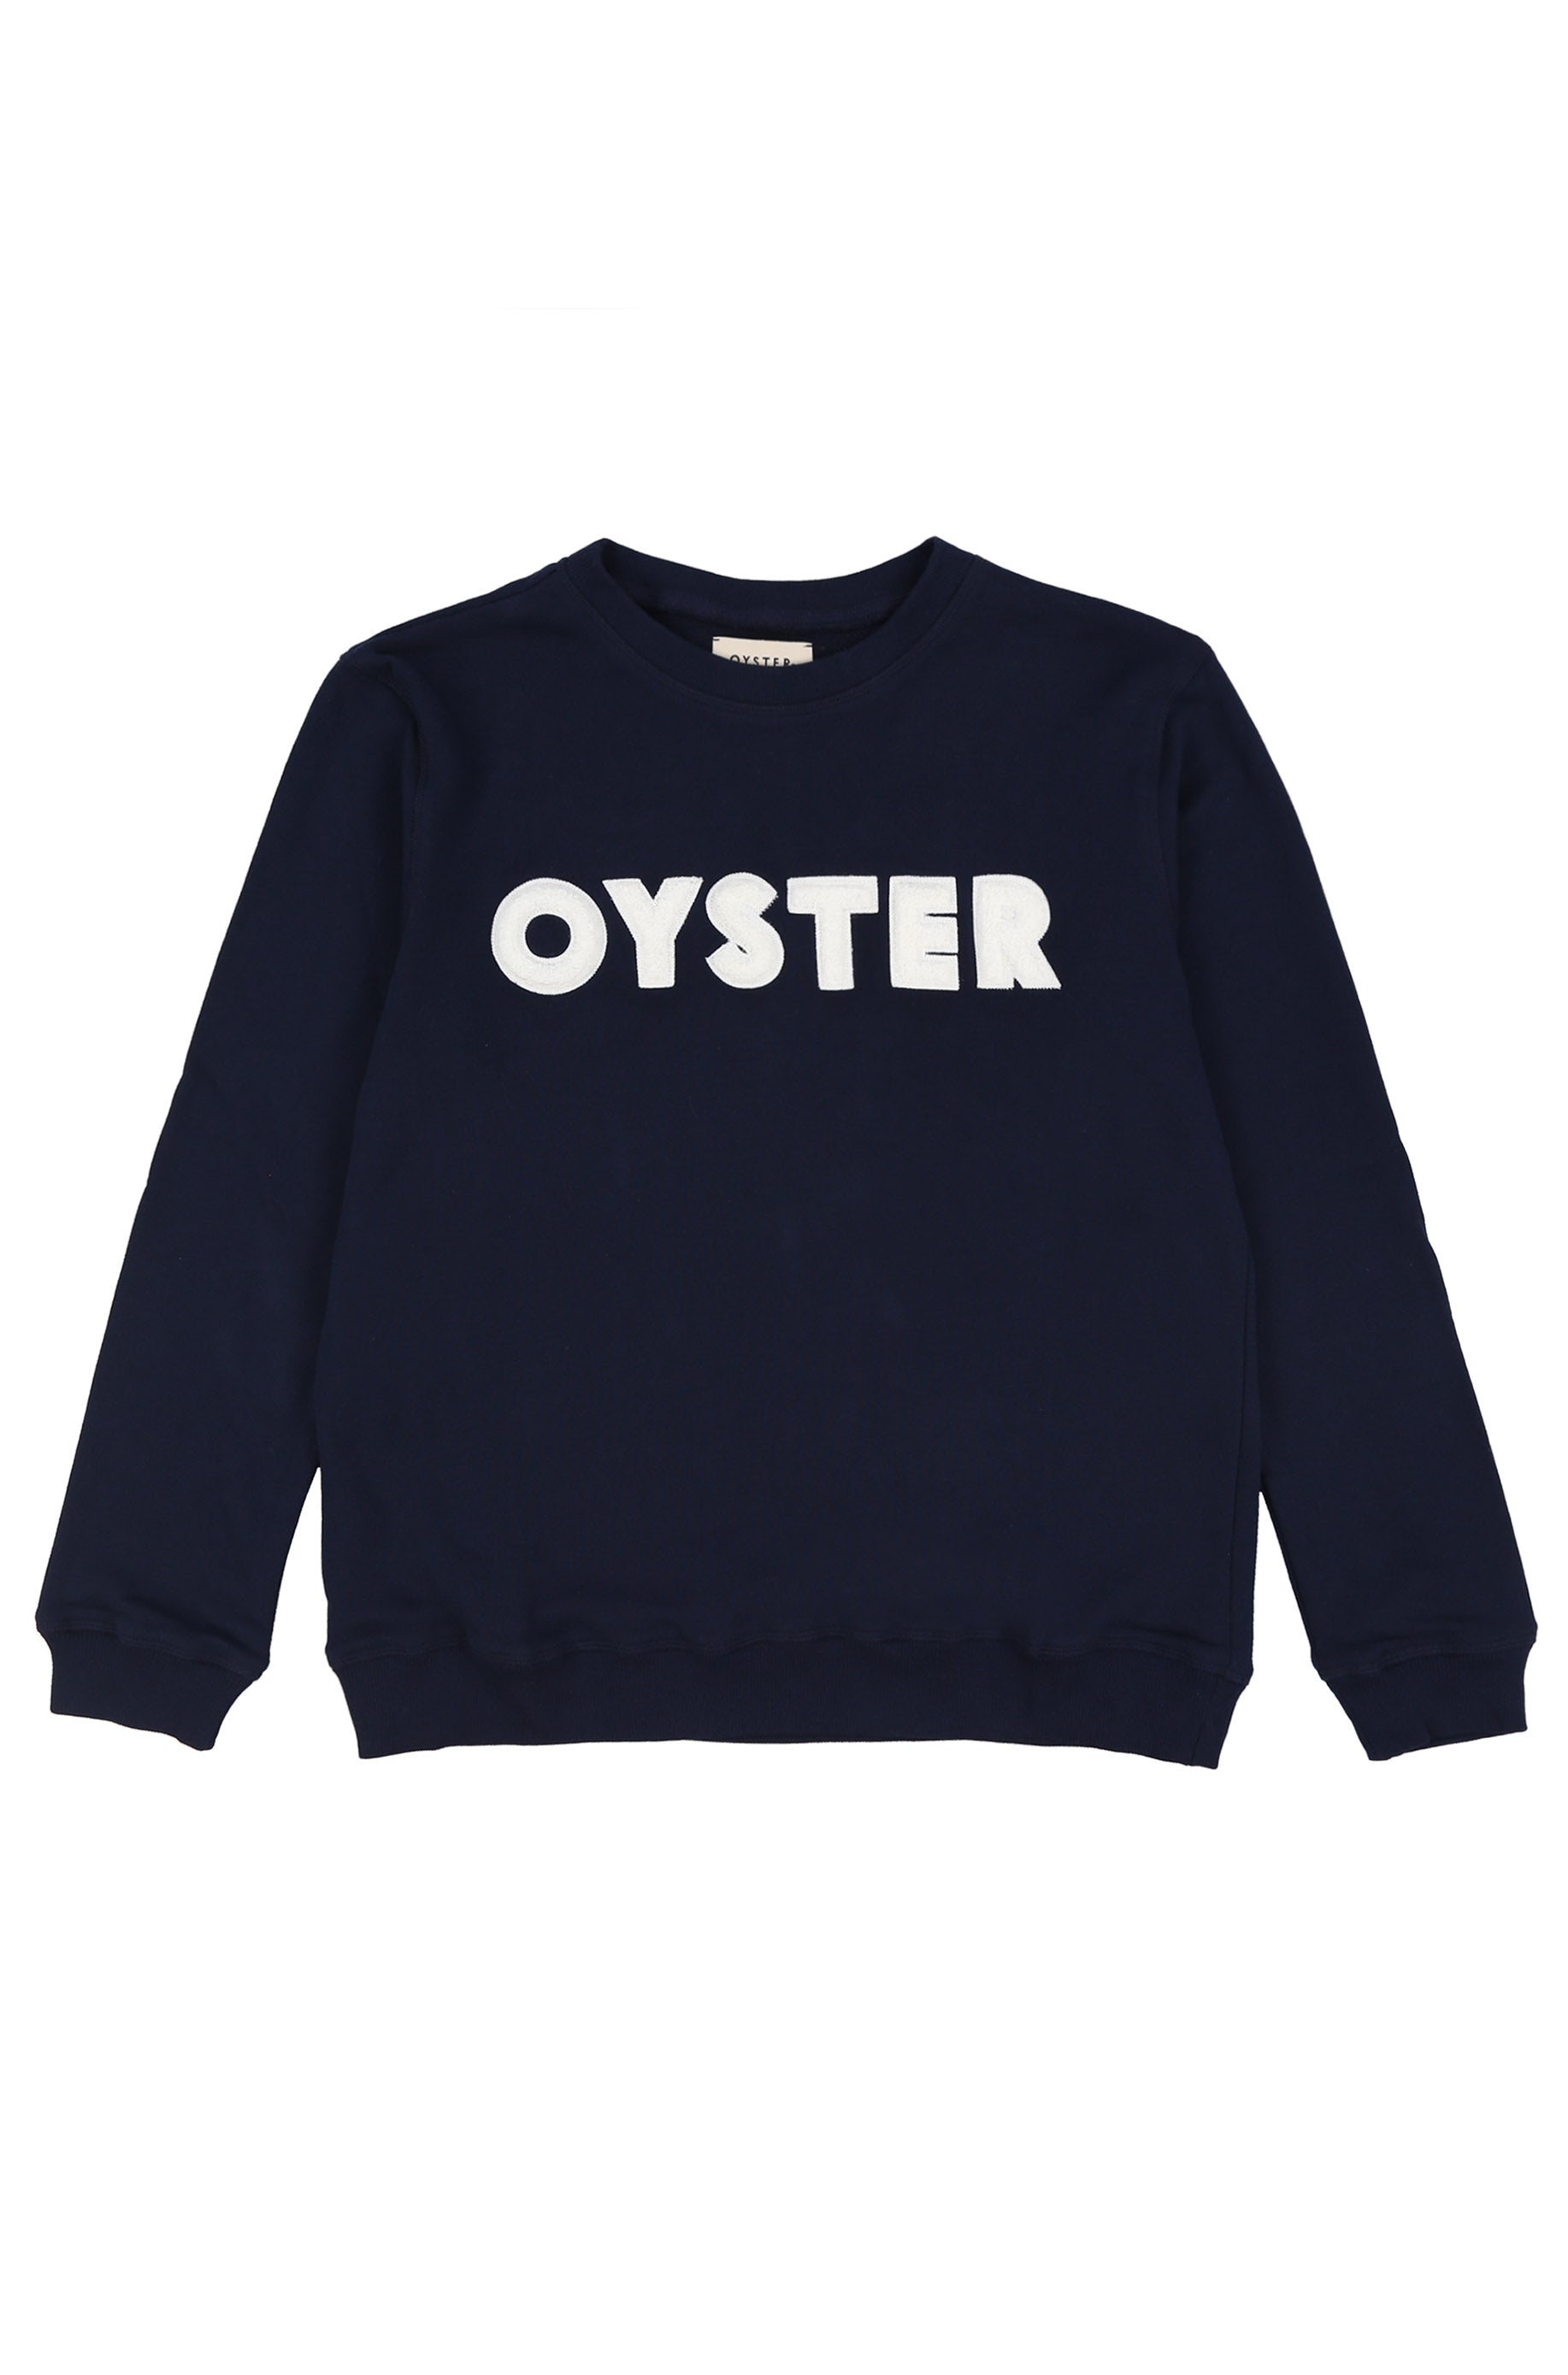 ICO Oysters Navy Crewneck Sweatshirt 2XL